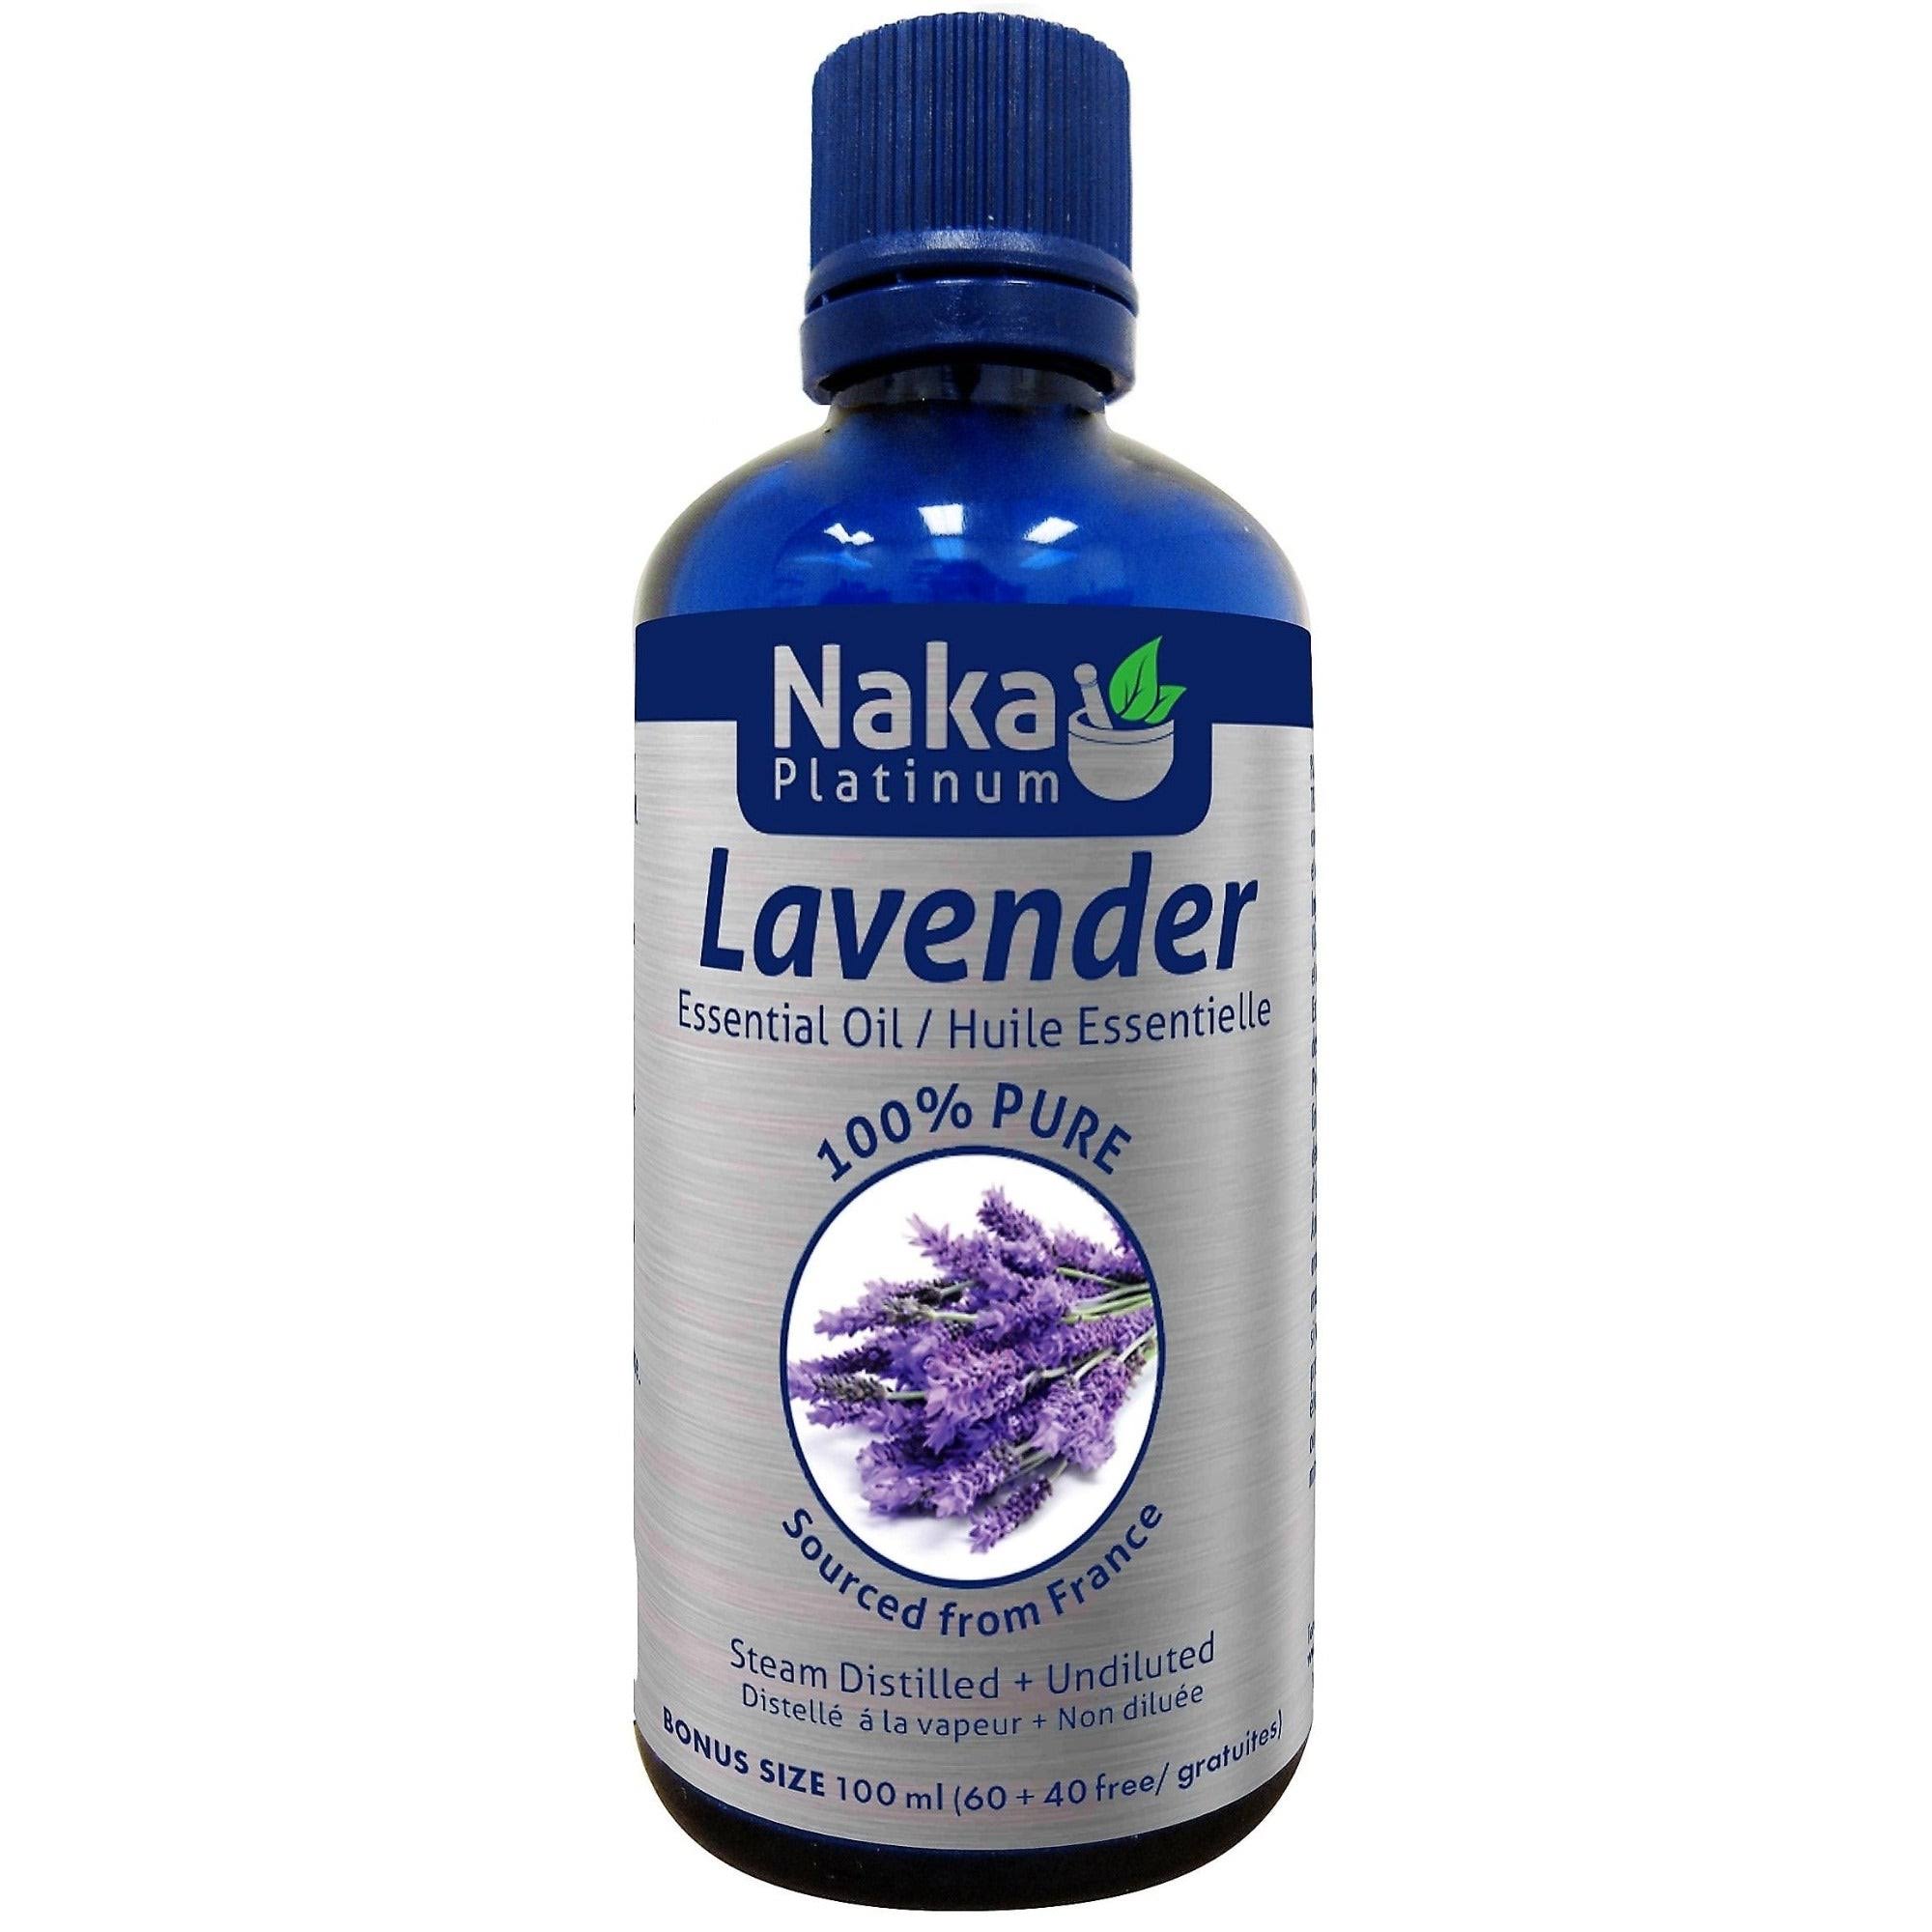 Naka Platinum Lavender Essential Oil 100ml